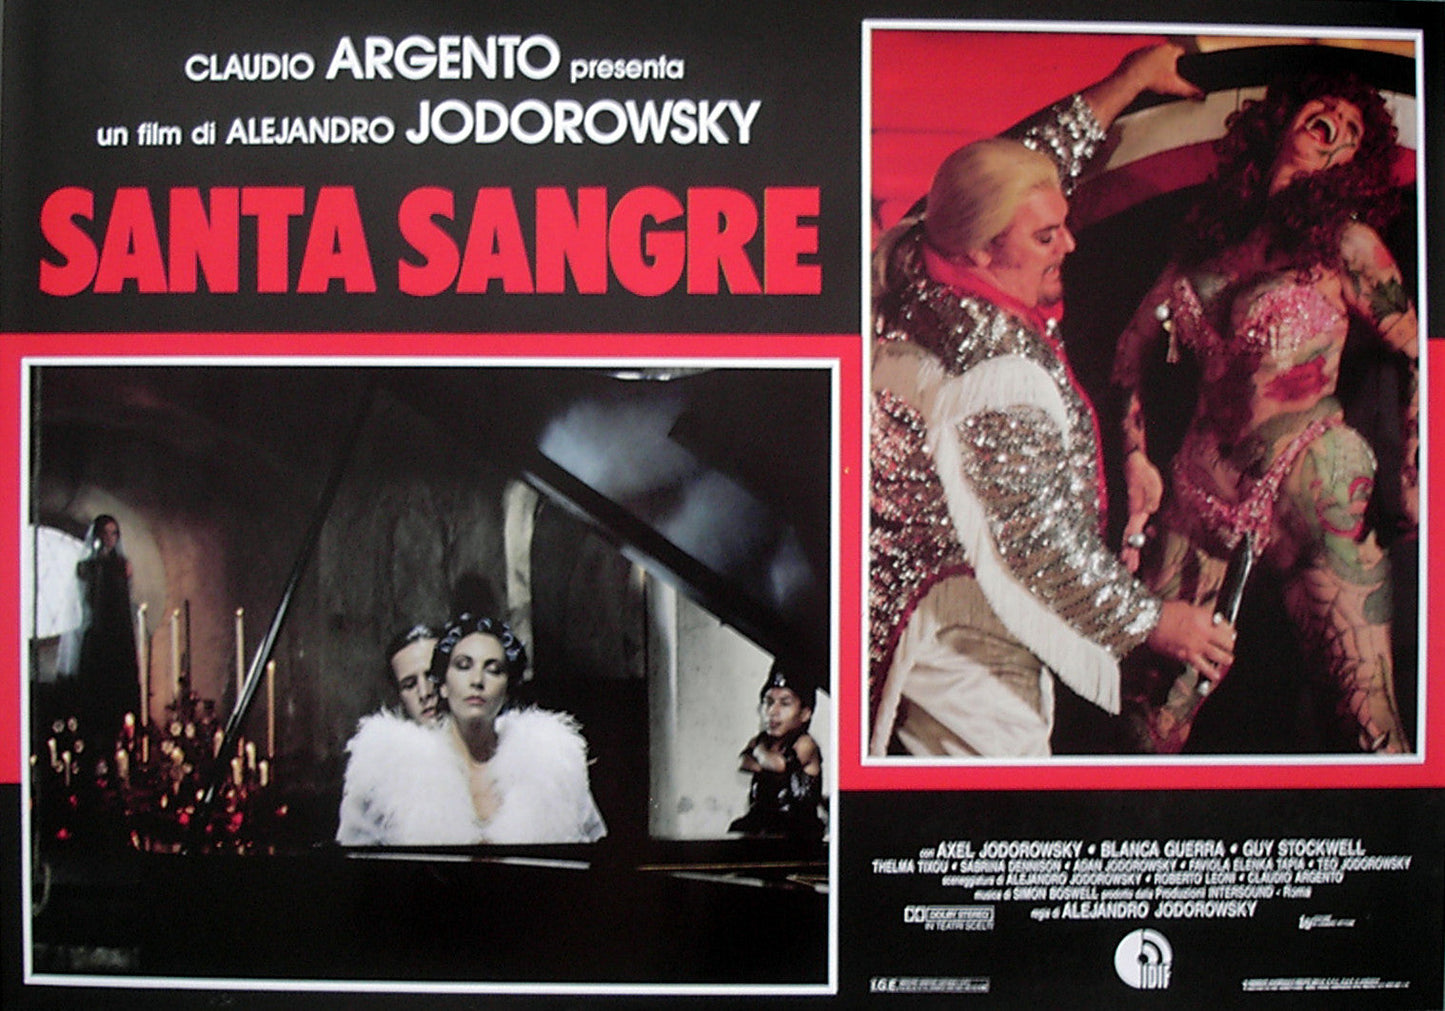 SANTA SANGRE - Italian photobusta poster